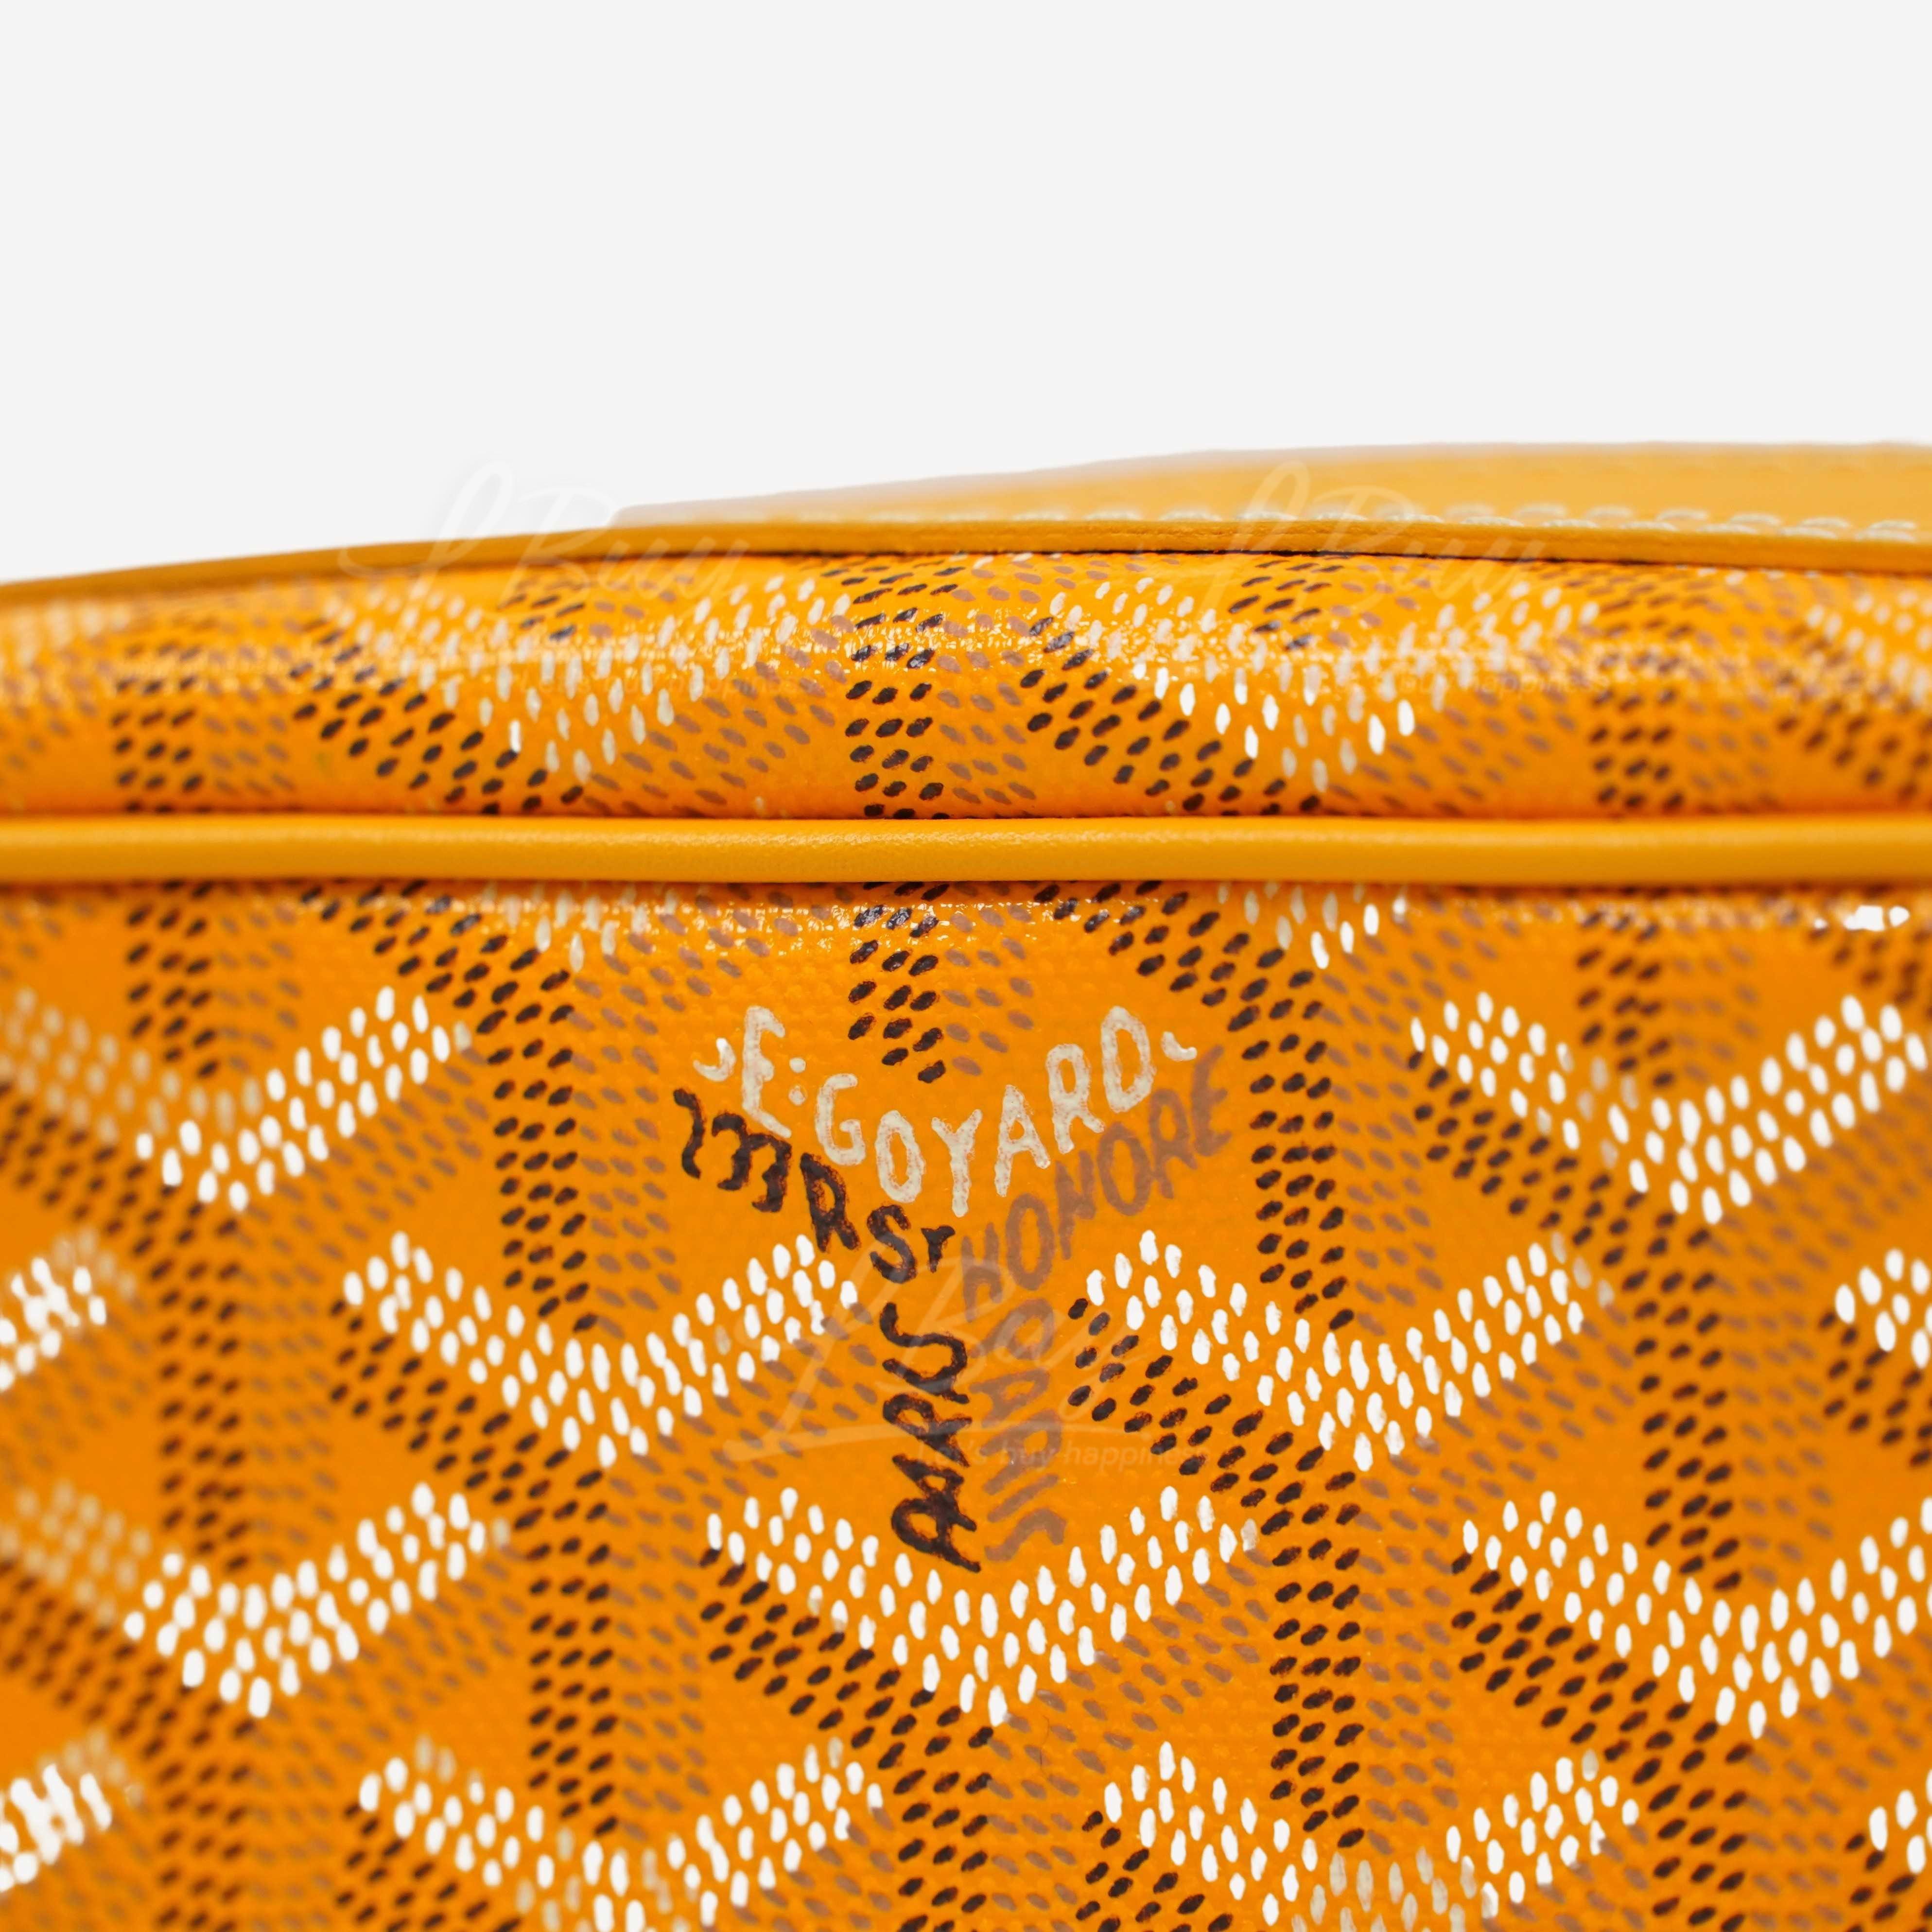 GOYARD CAP-VERT PM BAG GREY – Lbite Luxury Branded - Your Trusted Luxury  Expert